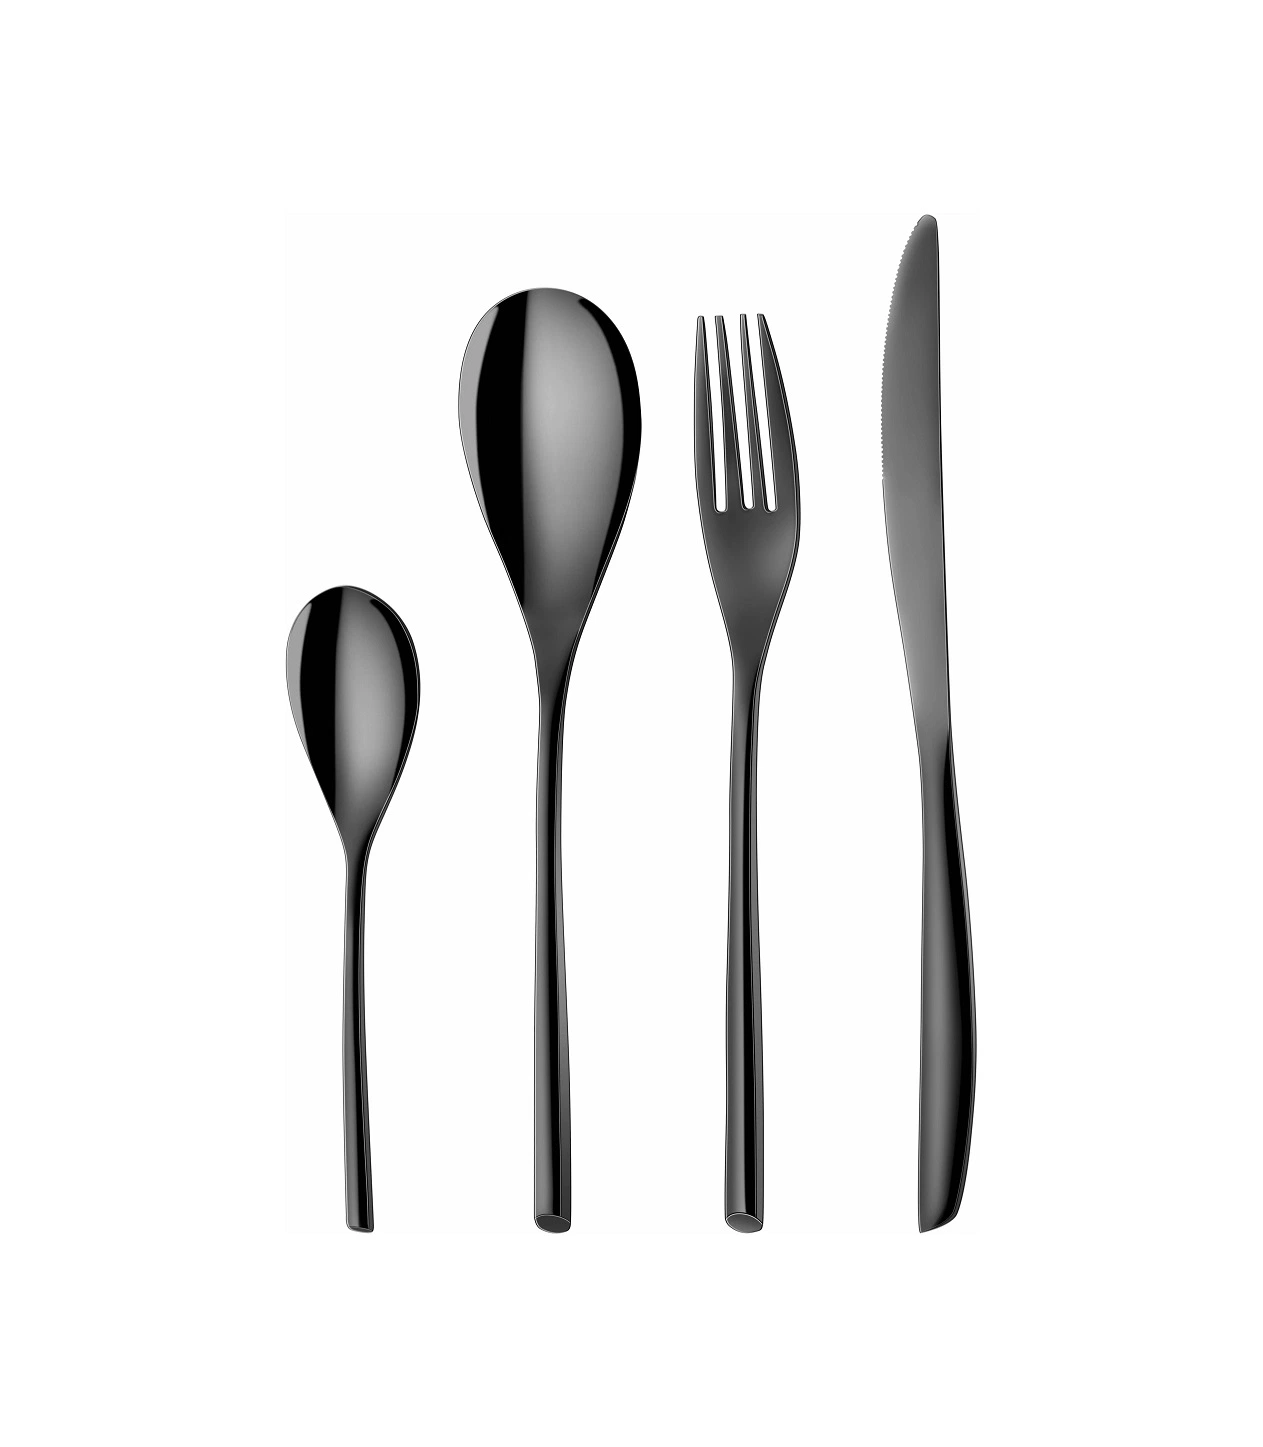 Stainless Steel Knife Spoon and Fork Cutlery/Tableware